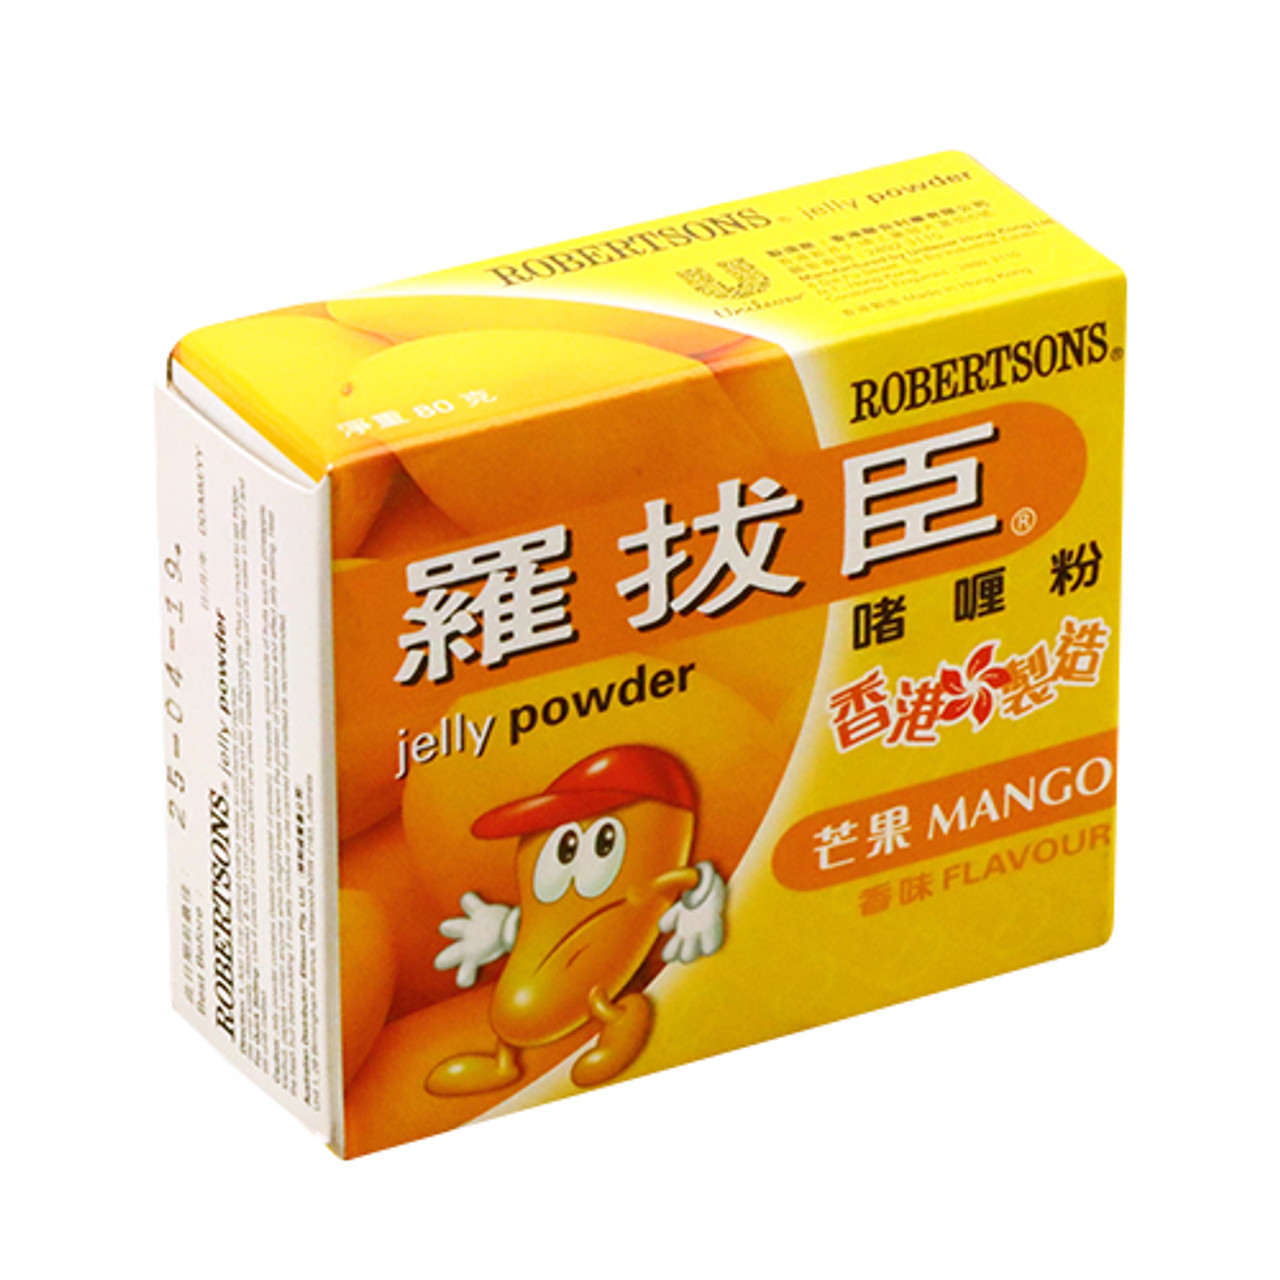 ROBERTSON Jelly Powder Mango Flavor 80G 羅拔臣 啫喱粉芒果味 80G – HKMART